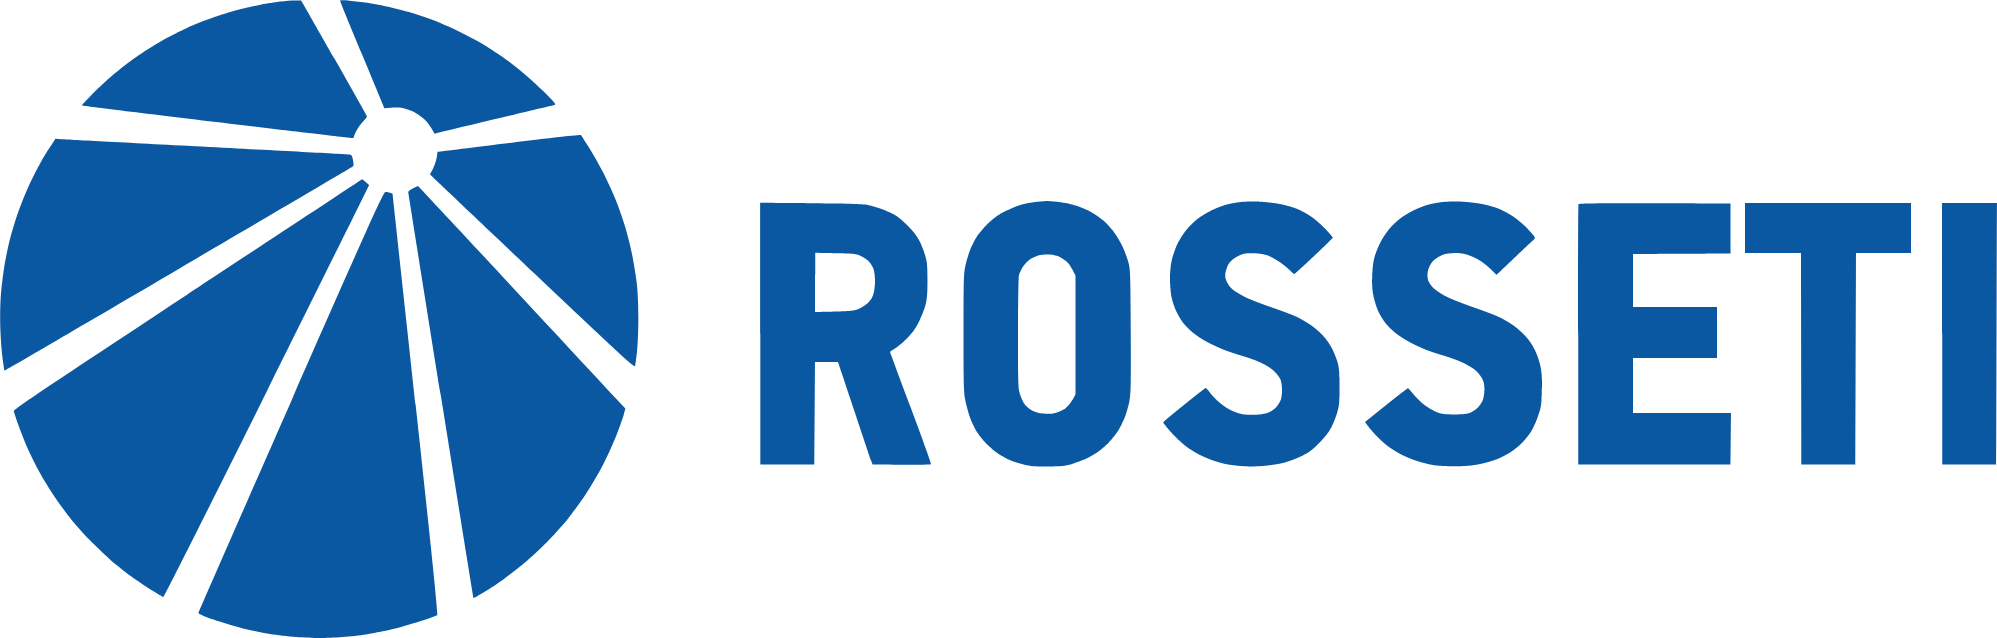 Rosseti logo in transparent PNG format